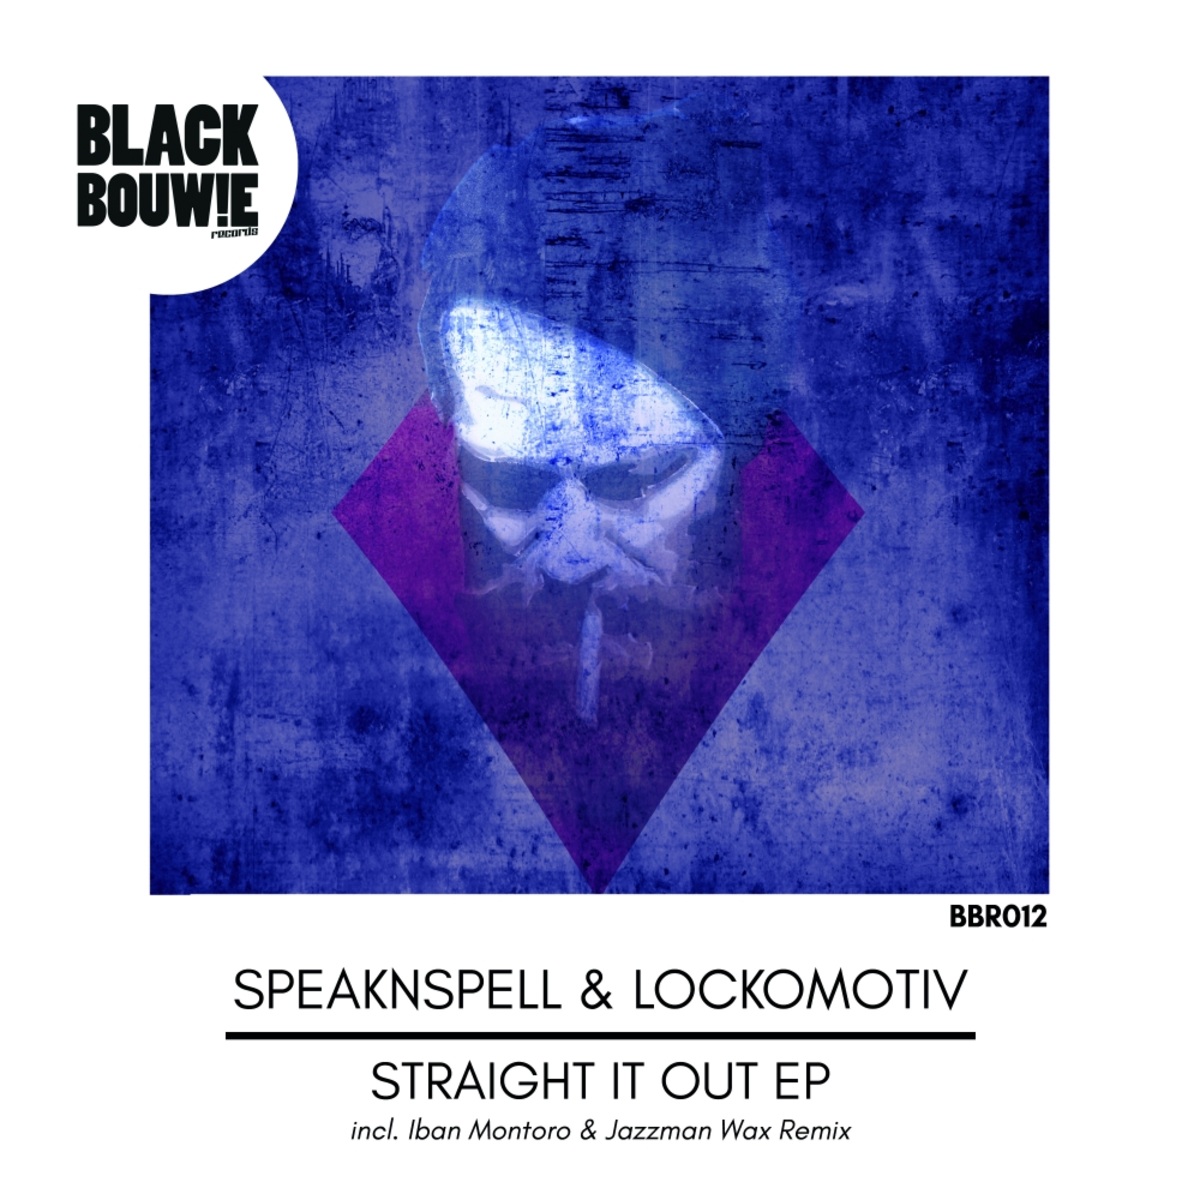 Speaknspell & Lockomotiv - Straight It Out EP / Black Bouwie Records